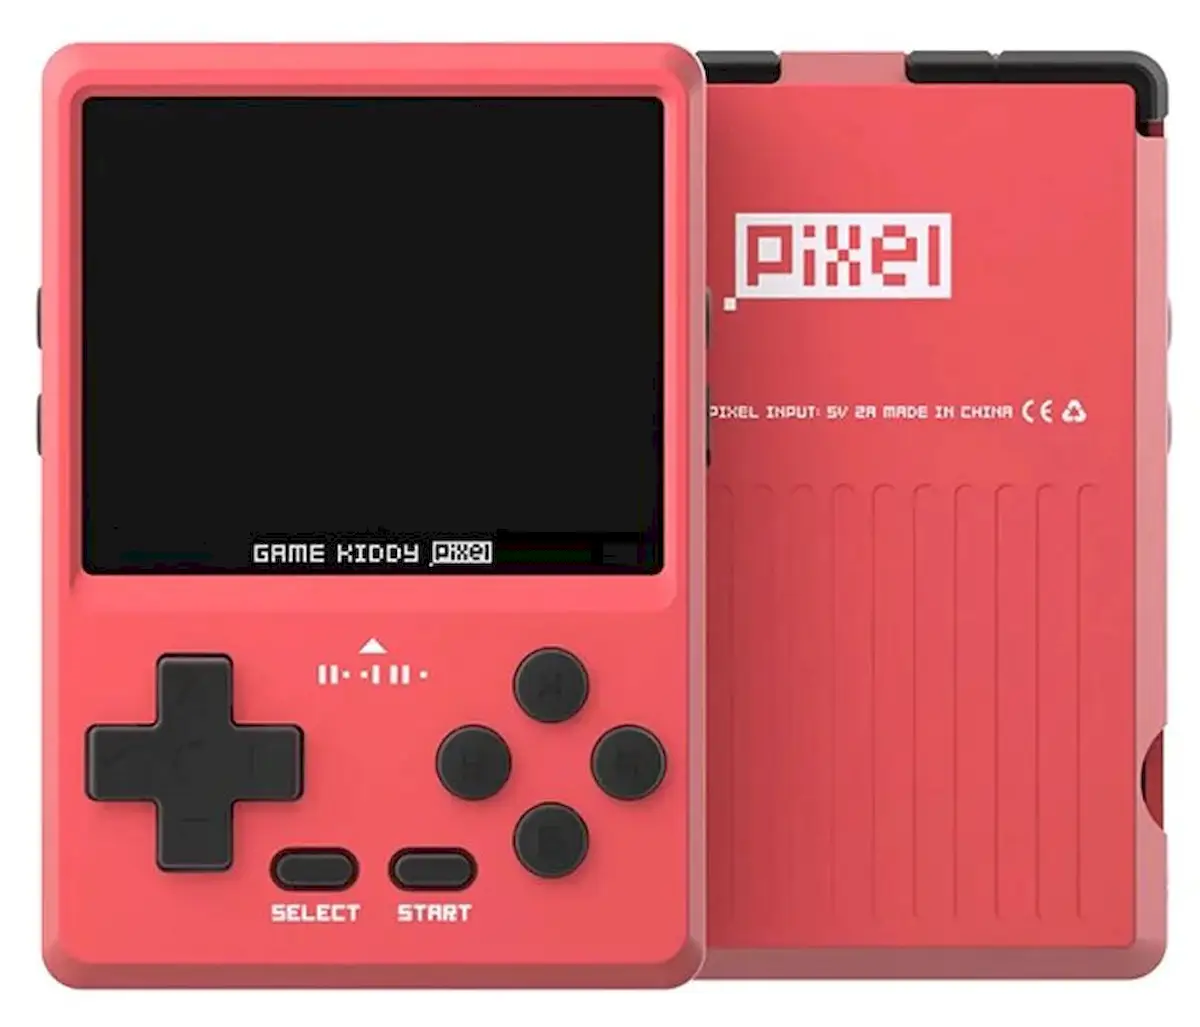 Console de jogos retrô GKD Pixel já está disponível por US$ 90